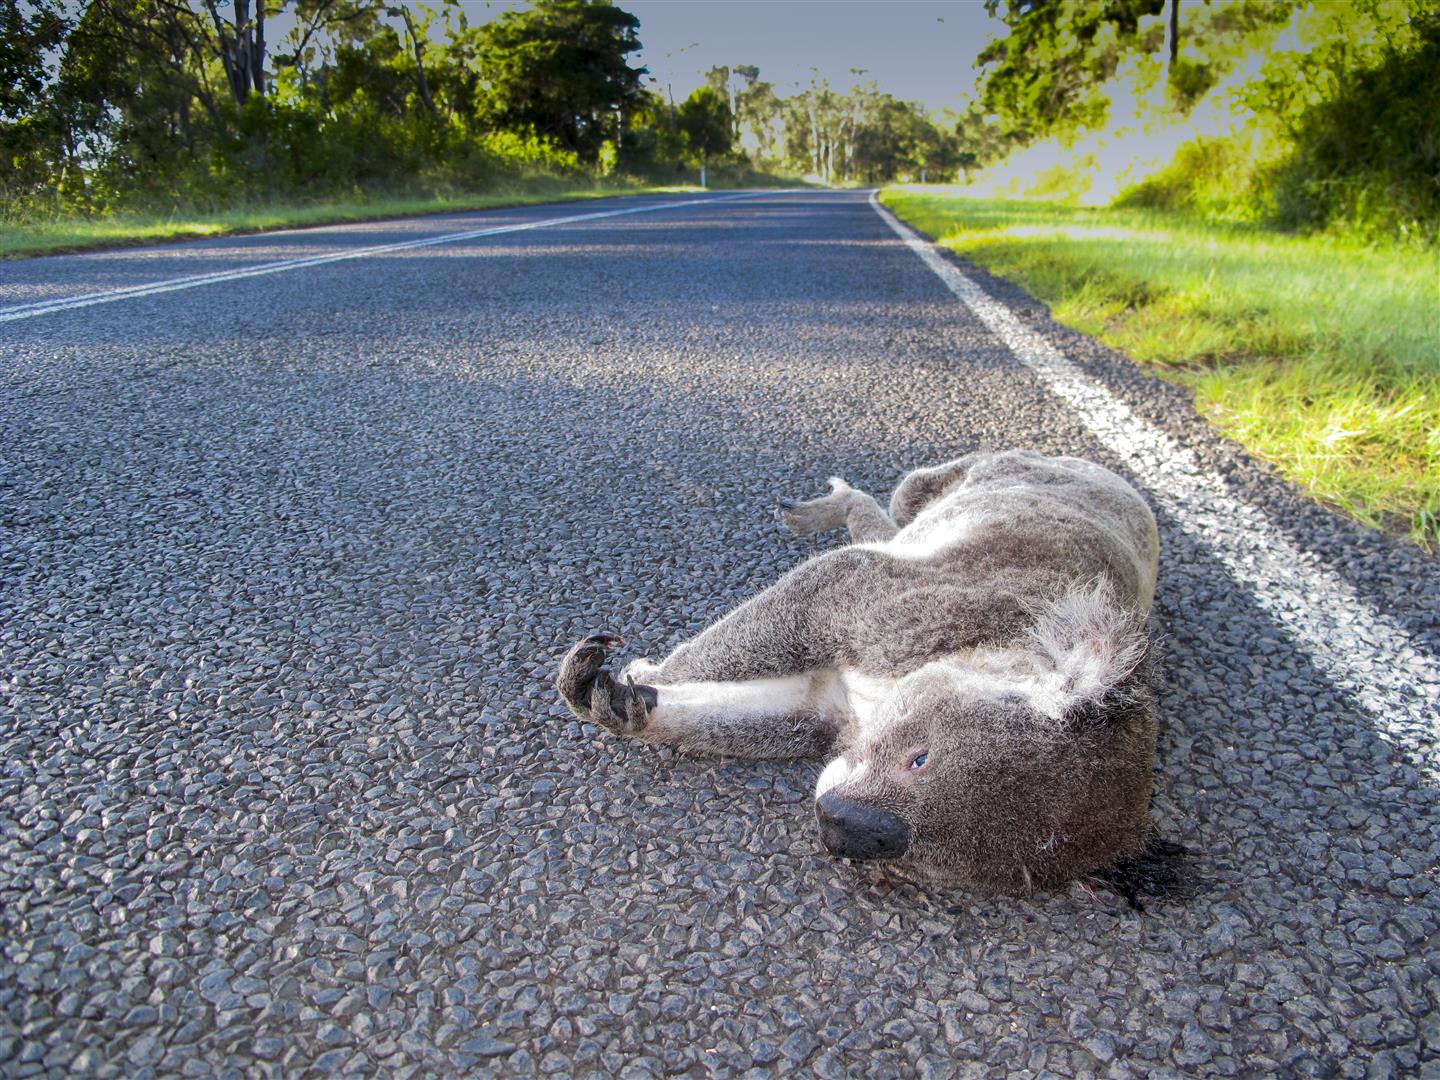 Koala (Phascolarctos cinereus), dead on road, Crows Nest, Queensland. Photo by Robert Ashdown.